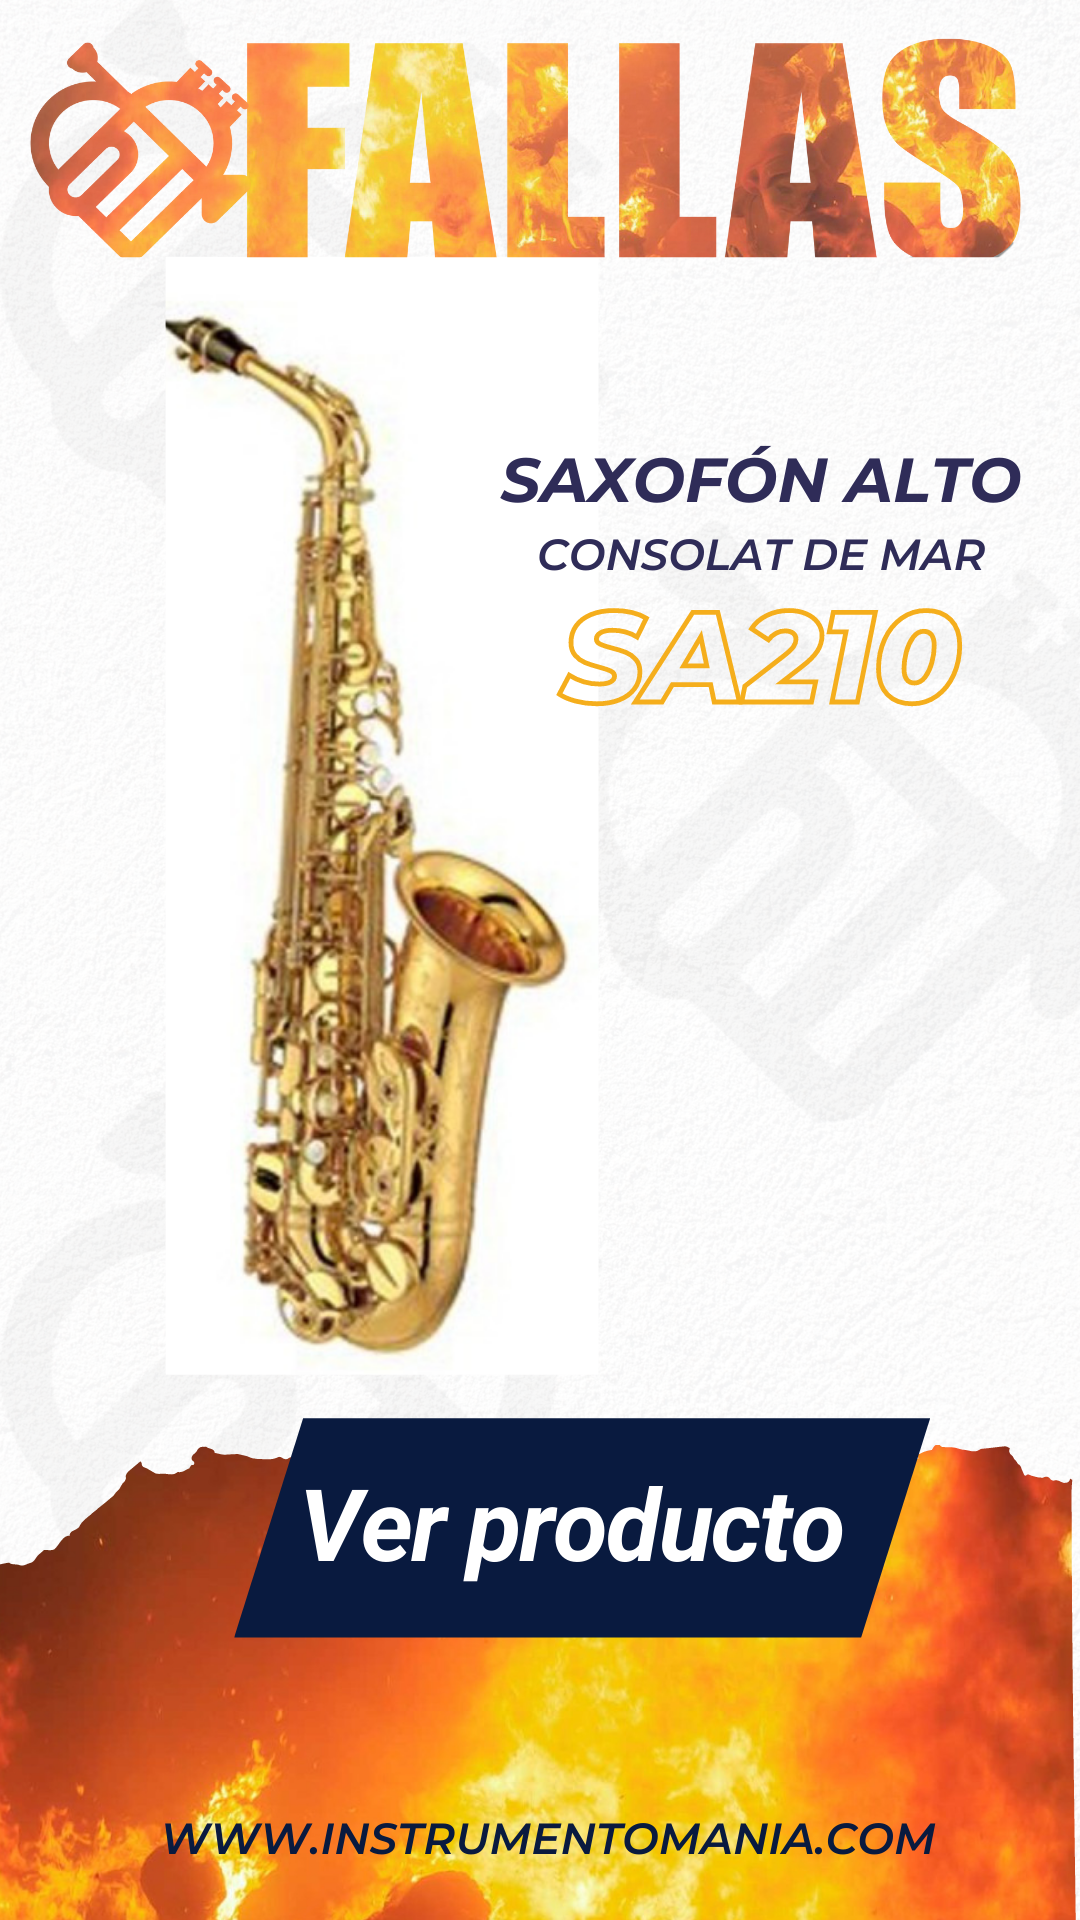 saxofon alto consolat